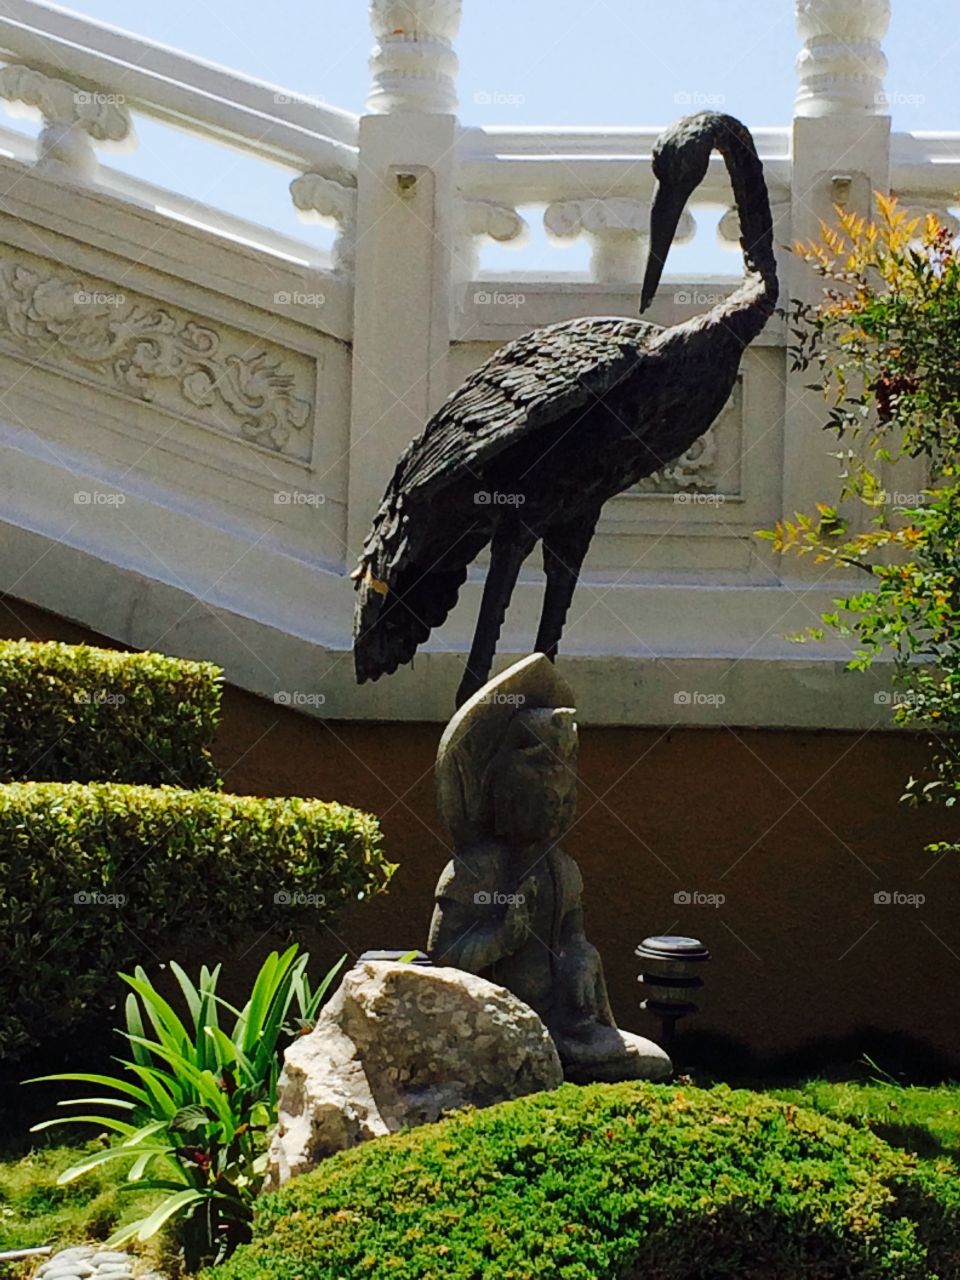 The heron statue 